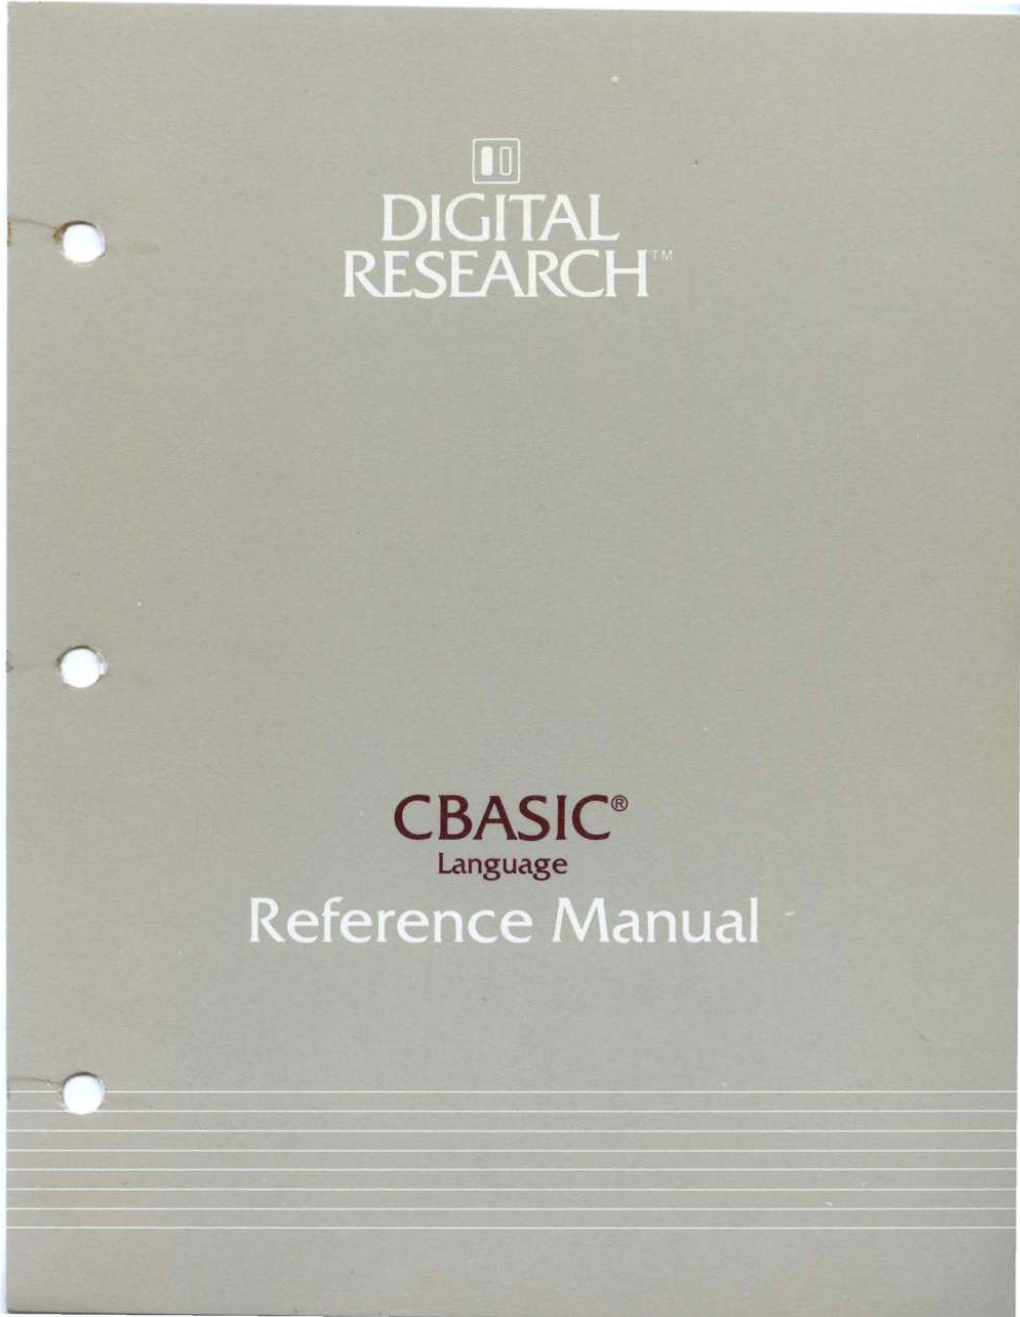 CBASIC® Language [Q] DIGITAL RESEARCH™